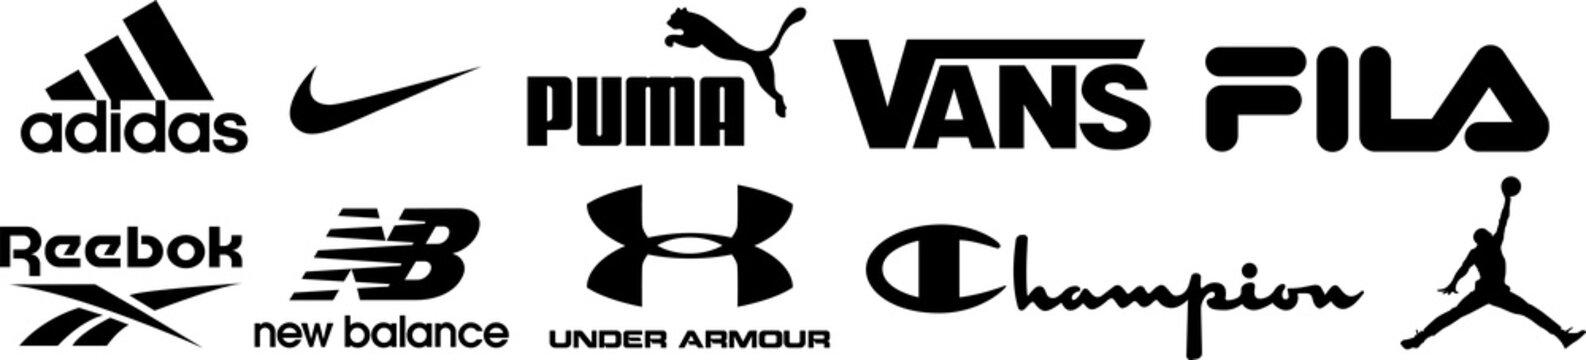 Collection of popular sportswear brands logo, Nike, Adidas, Under Armour, Puma, Reebok, Champion, New Balance, Vans, Fila. PNG